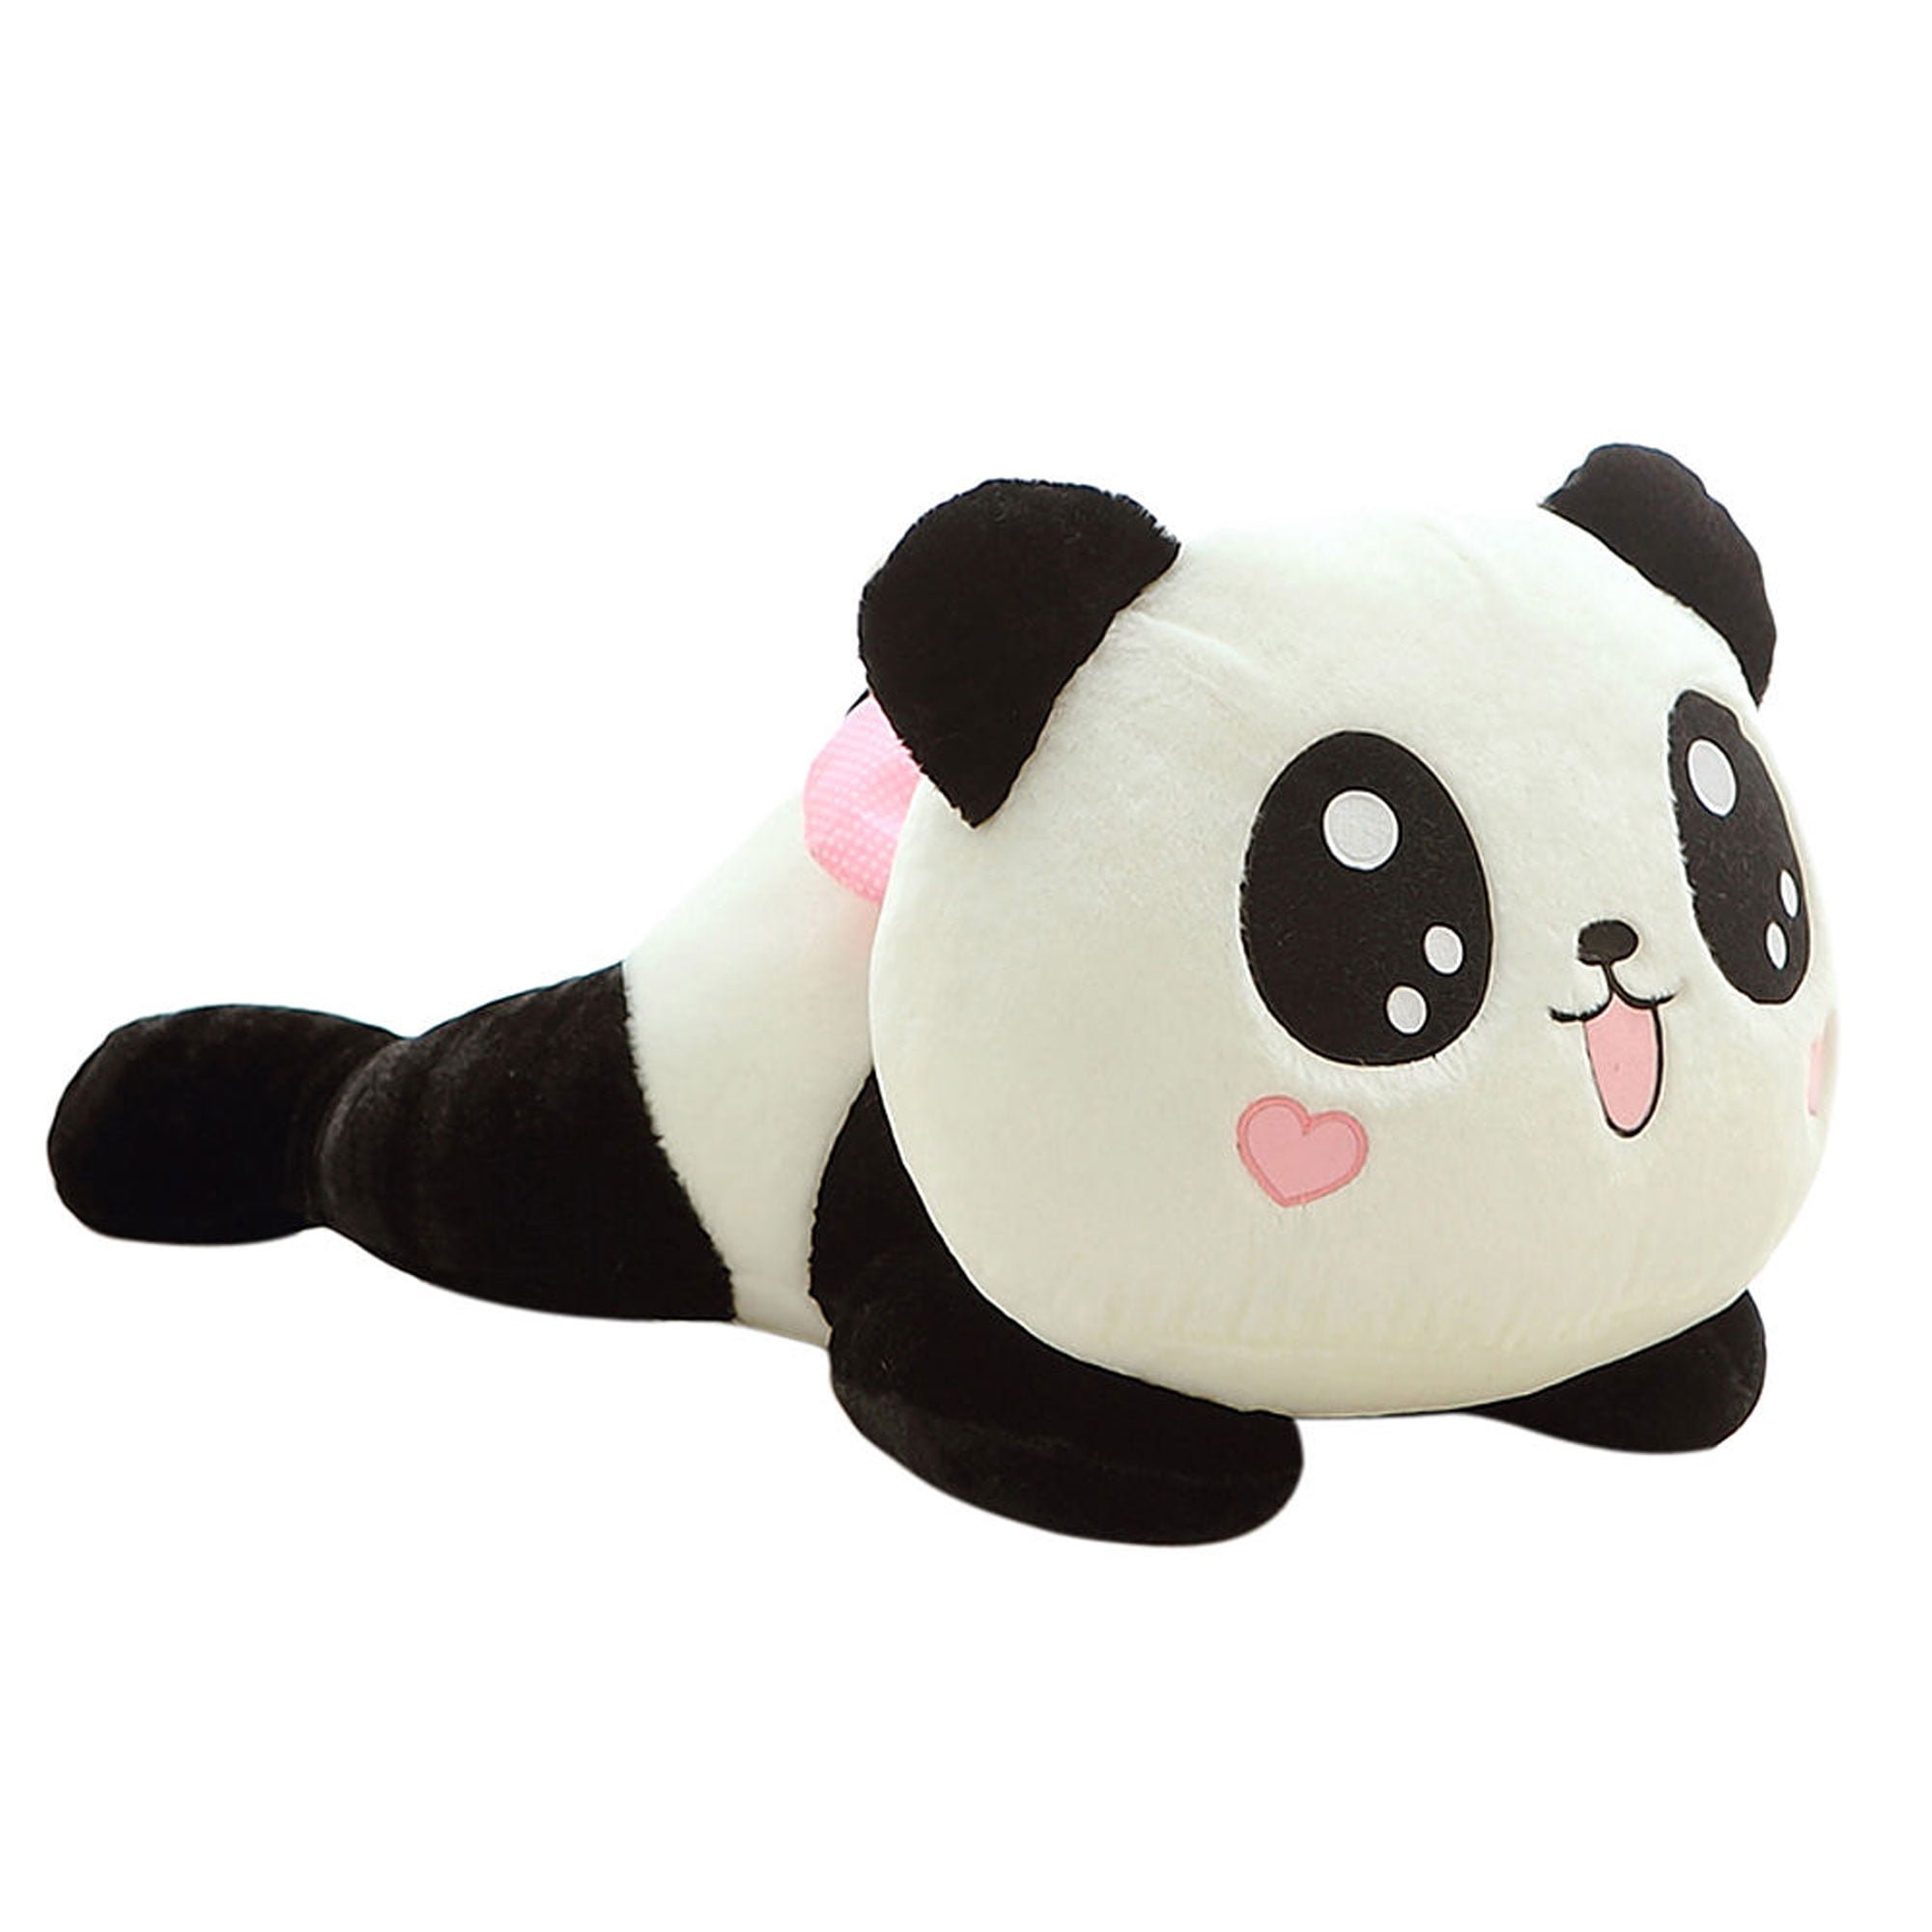 Cute Plush Doll Toy Stuffed Animal New Panda Soft Pillow Cushion Bolster Gift 